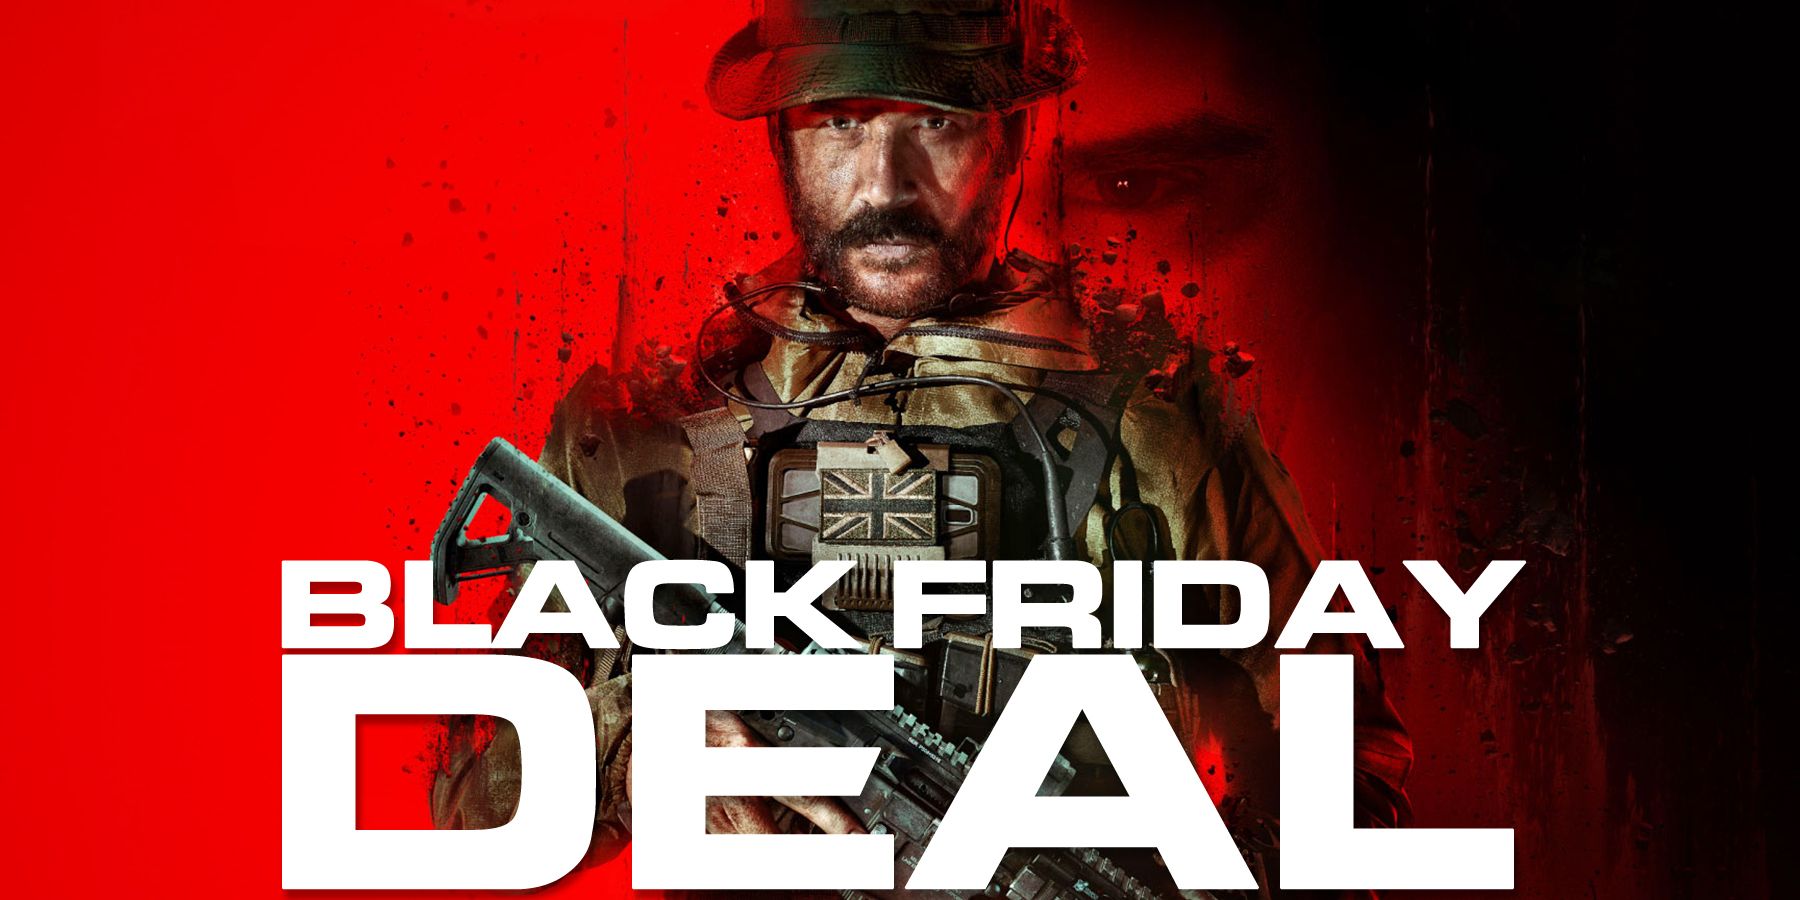 Grosse promo sur le pack PS5 + Call of Duty Modern Warfare 3 juste avant le  Black Friday